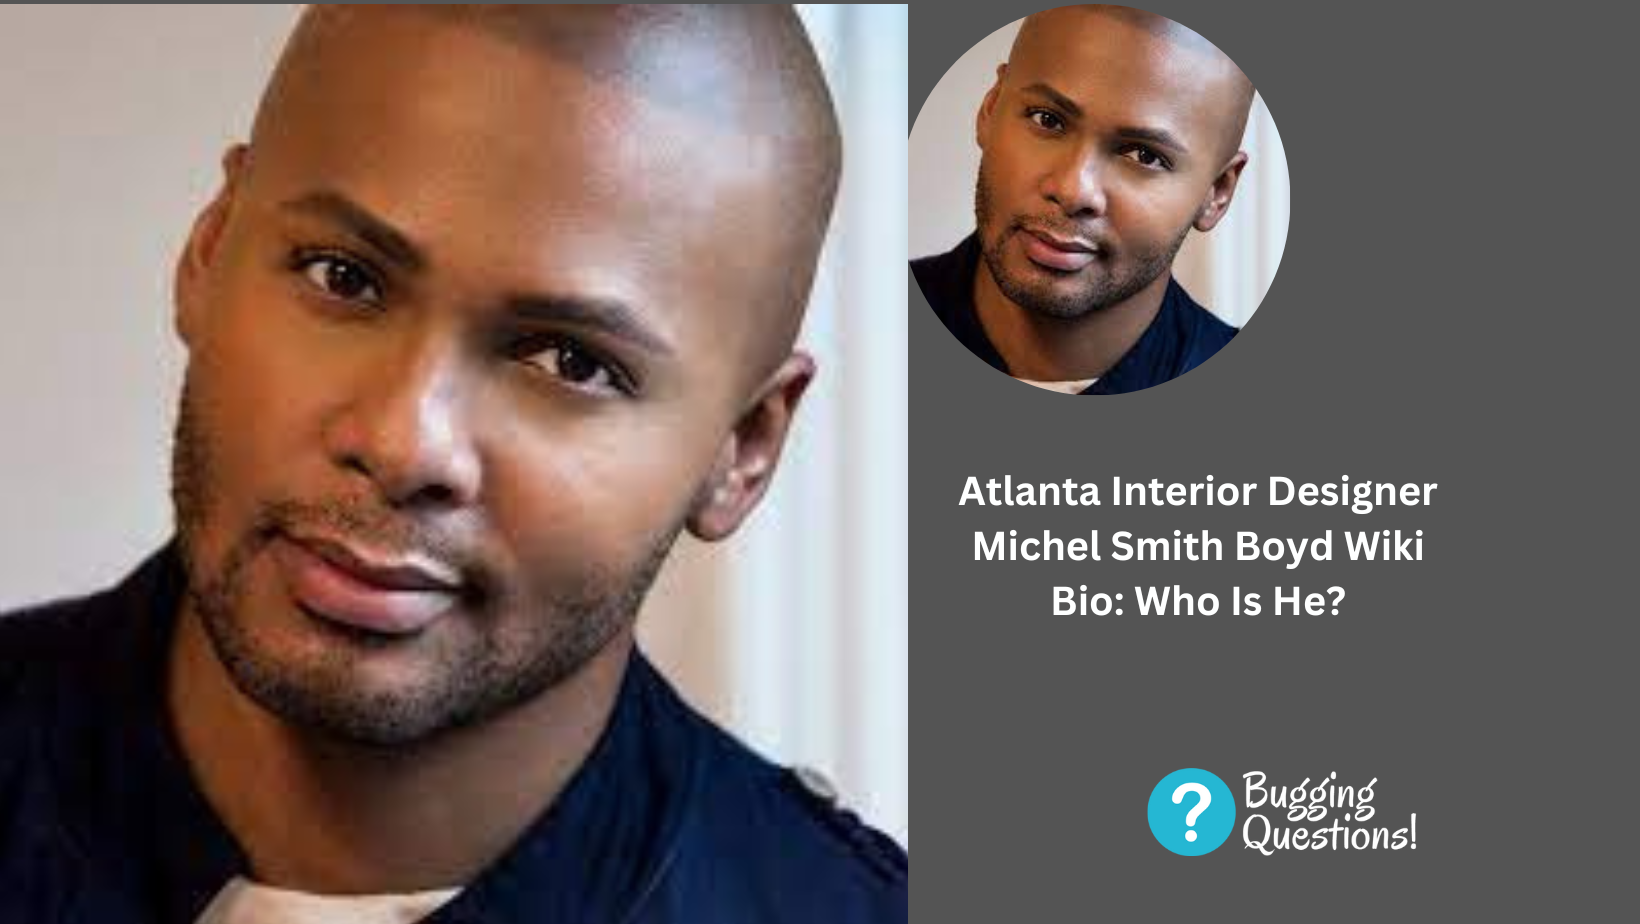 Atlanta Interior Designer Michel Smith Boyd Wiki Bio: Who Is He?